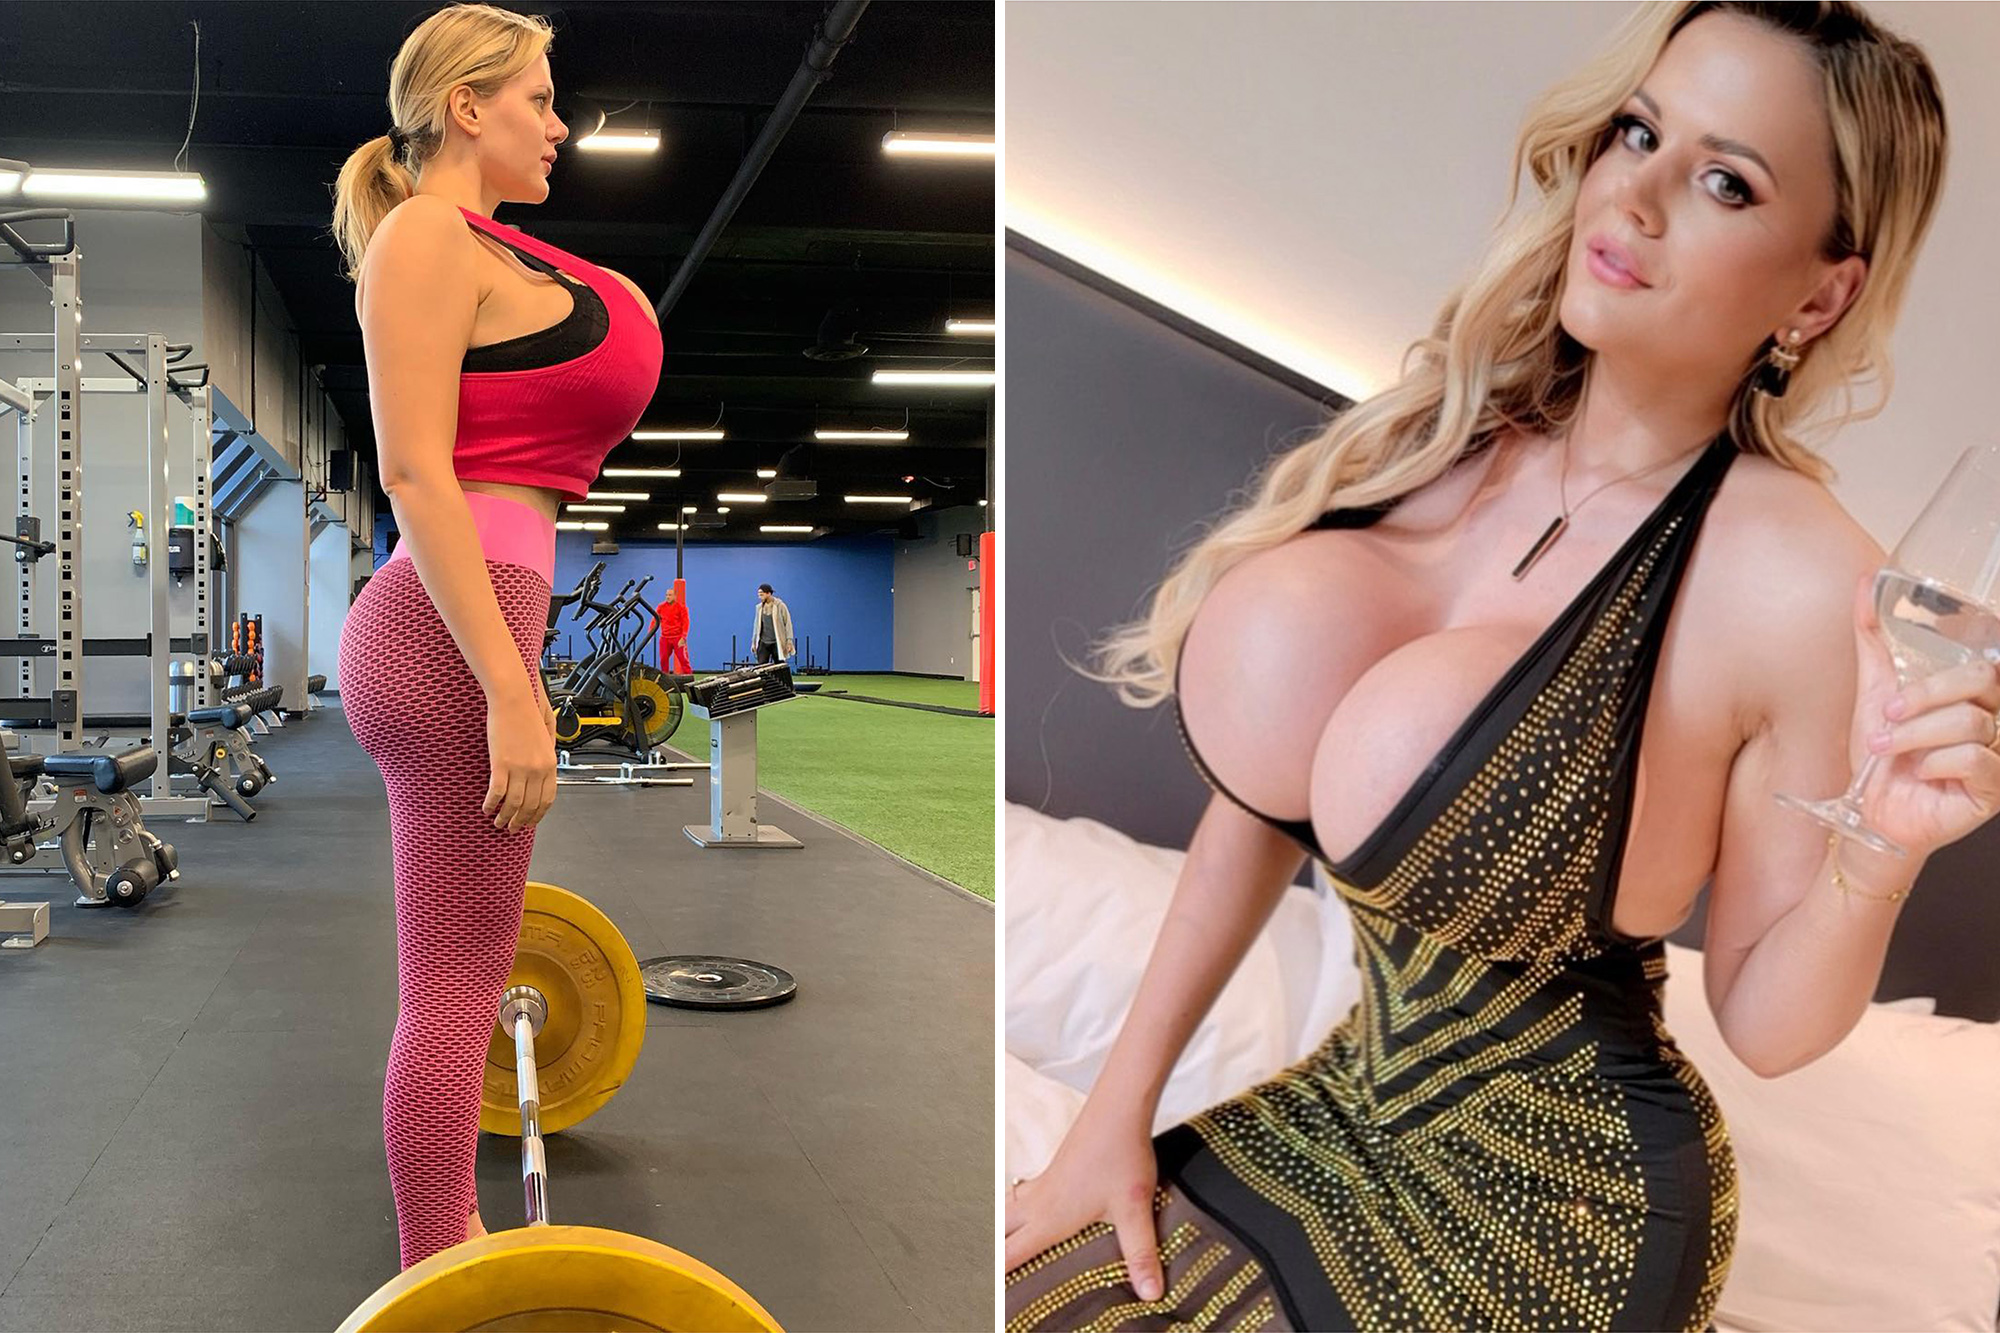 artharshan kalaichelvan recommends Fitness Model Huge Tits